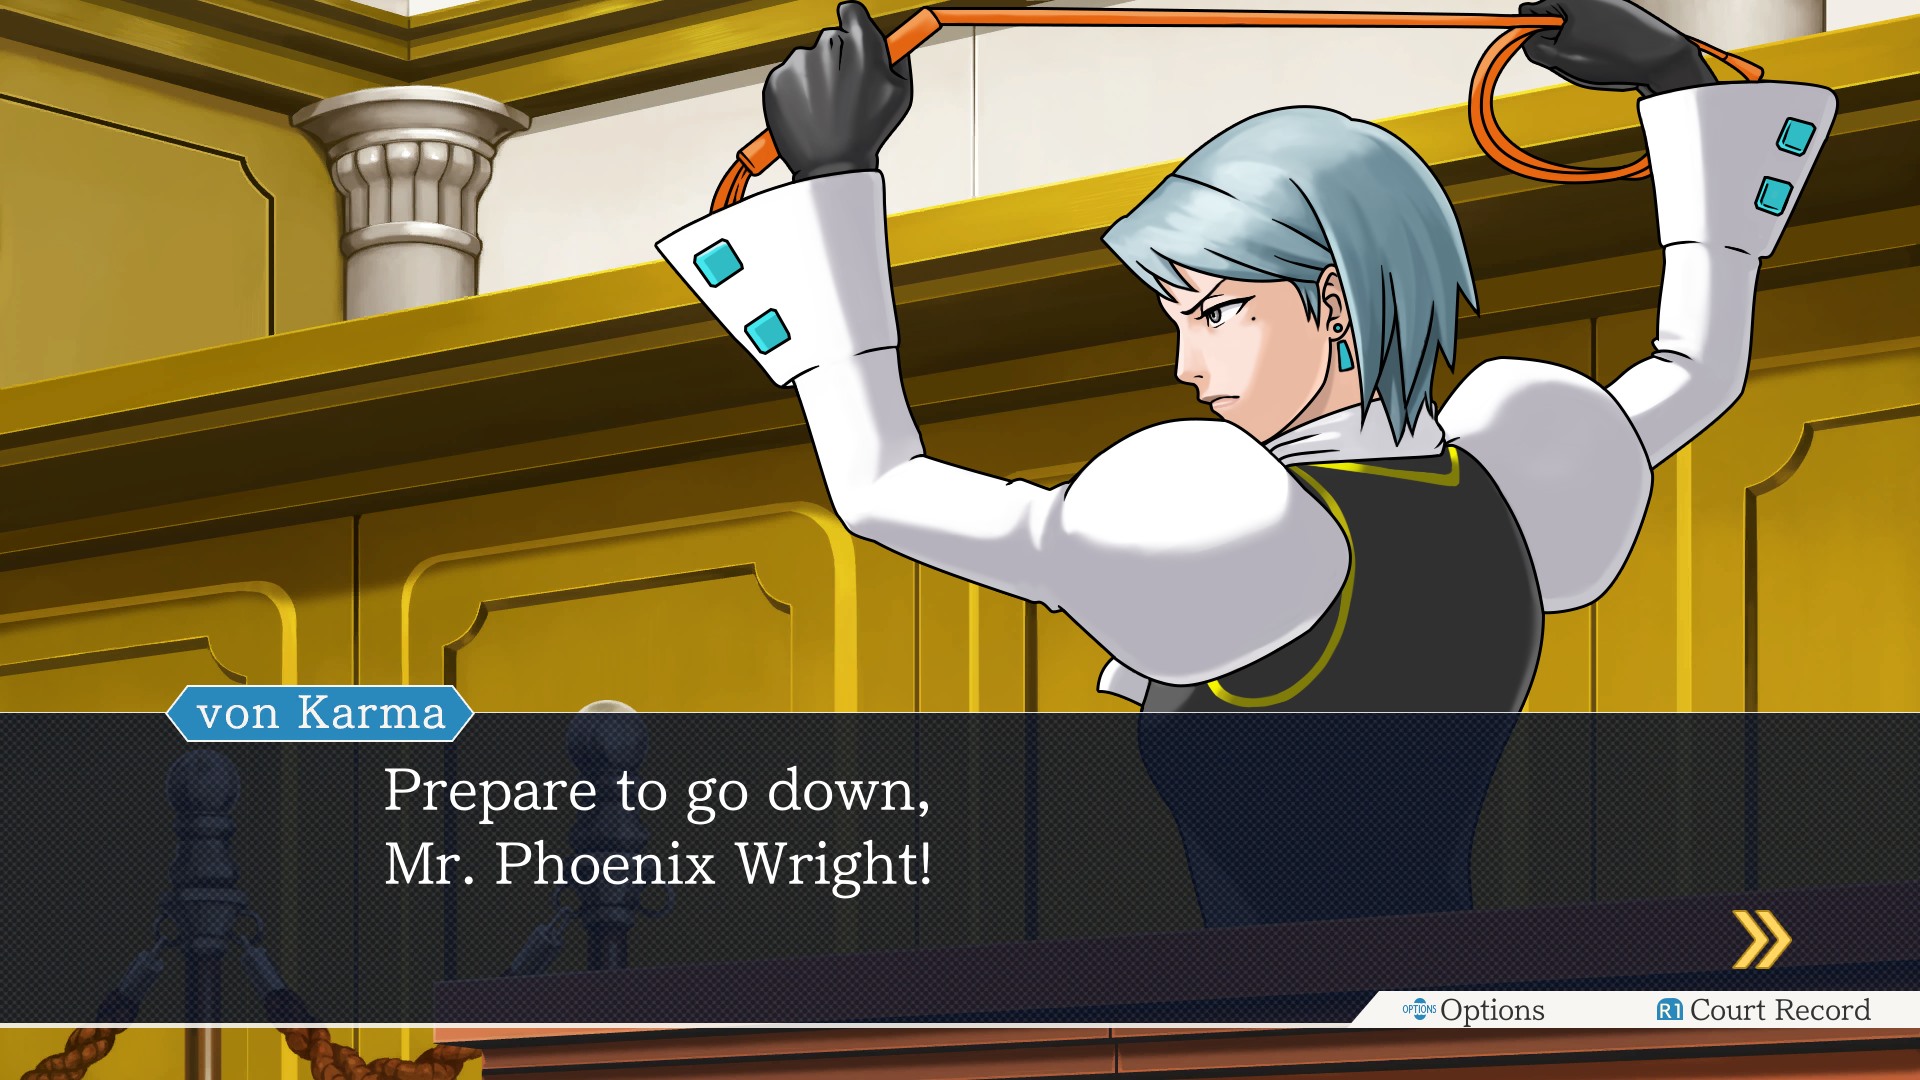 Análise de Phoenix Wright: Ace Attorney Trilogy